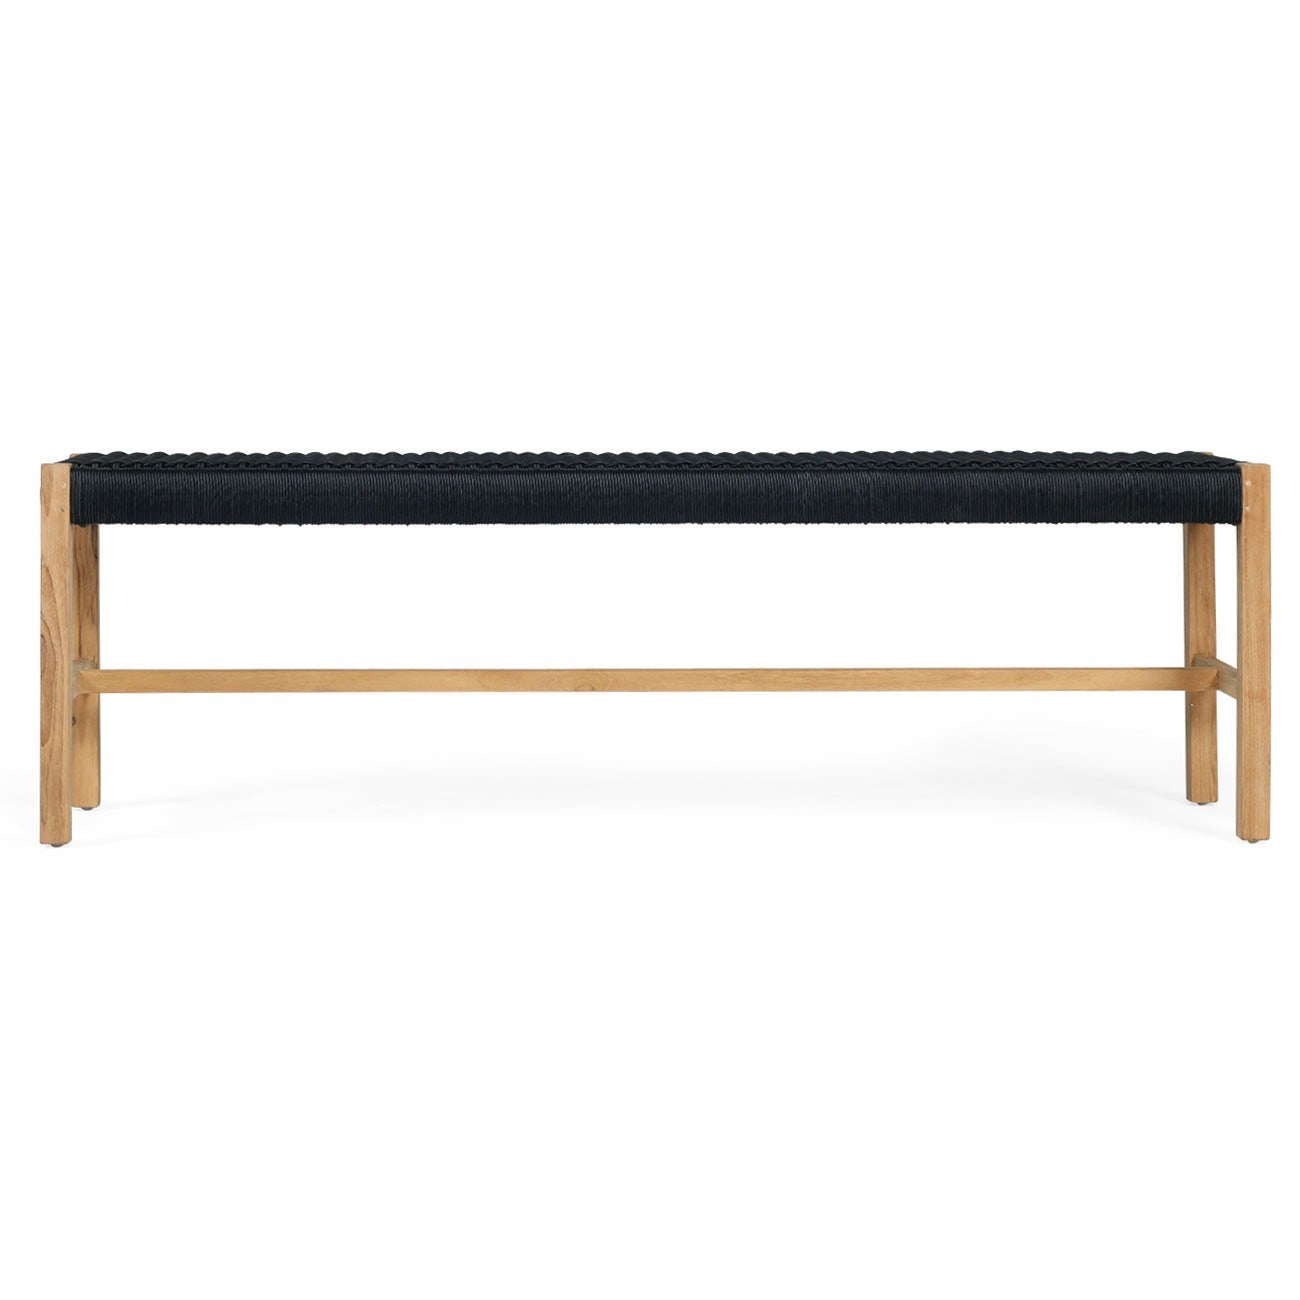 Merino Paper Cord & Teak Timber Bench, 152cm, Black / Natural